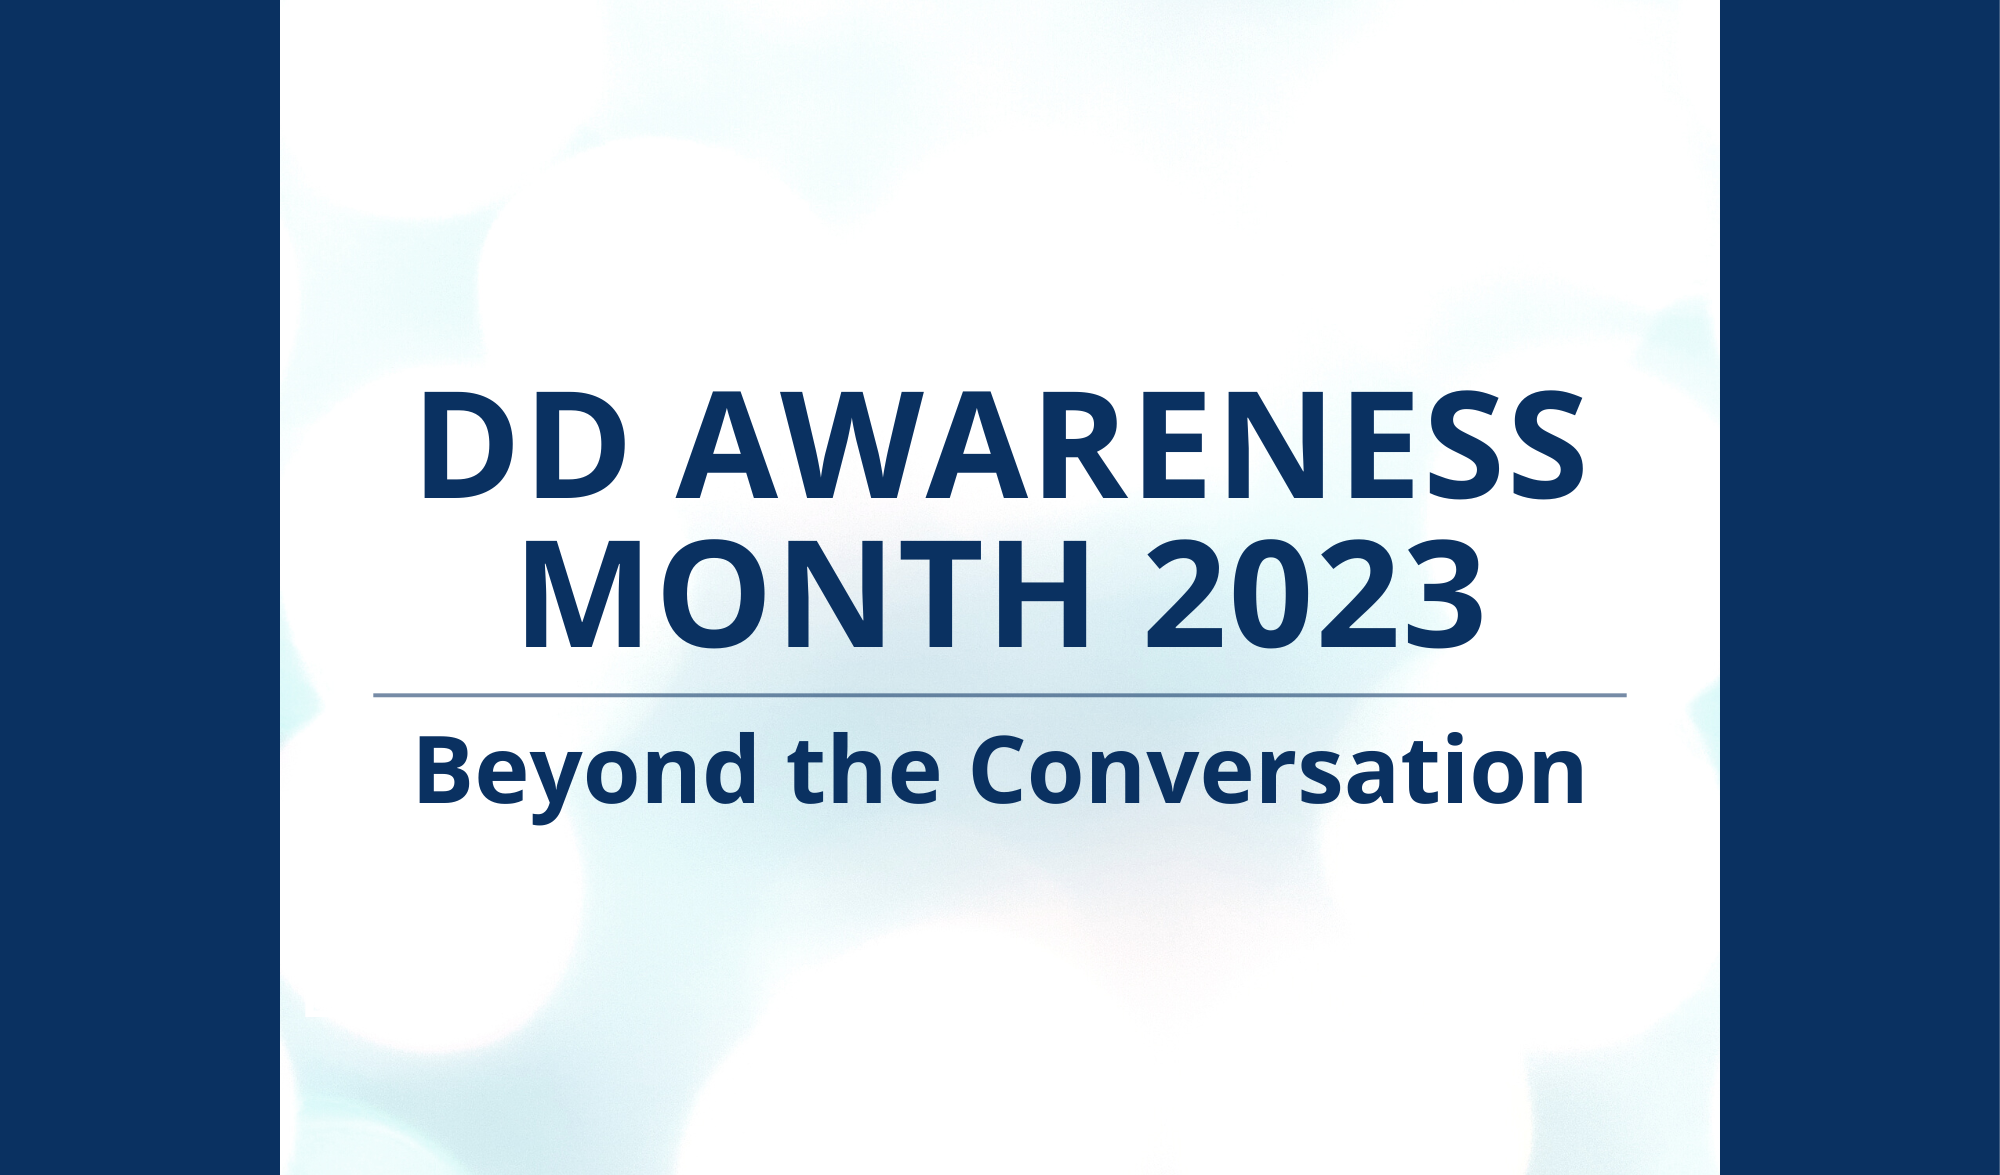 DD Awareness Month 2023: Beyond the Conversation